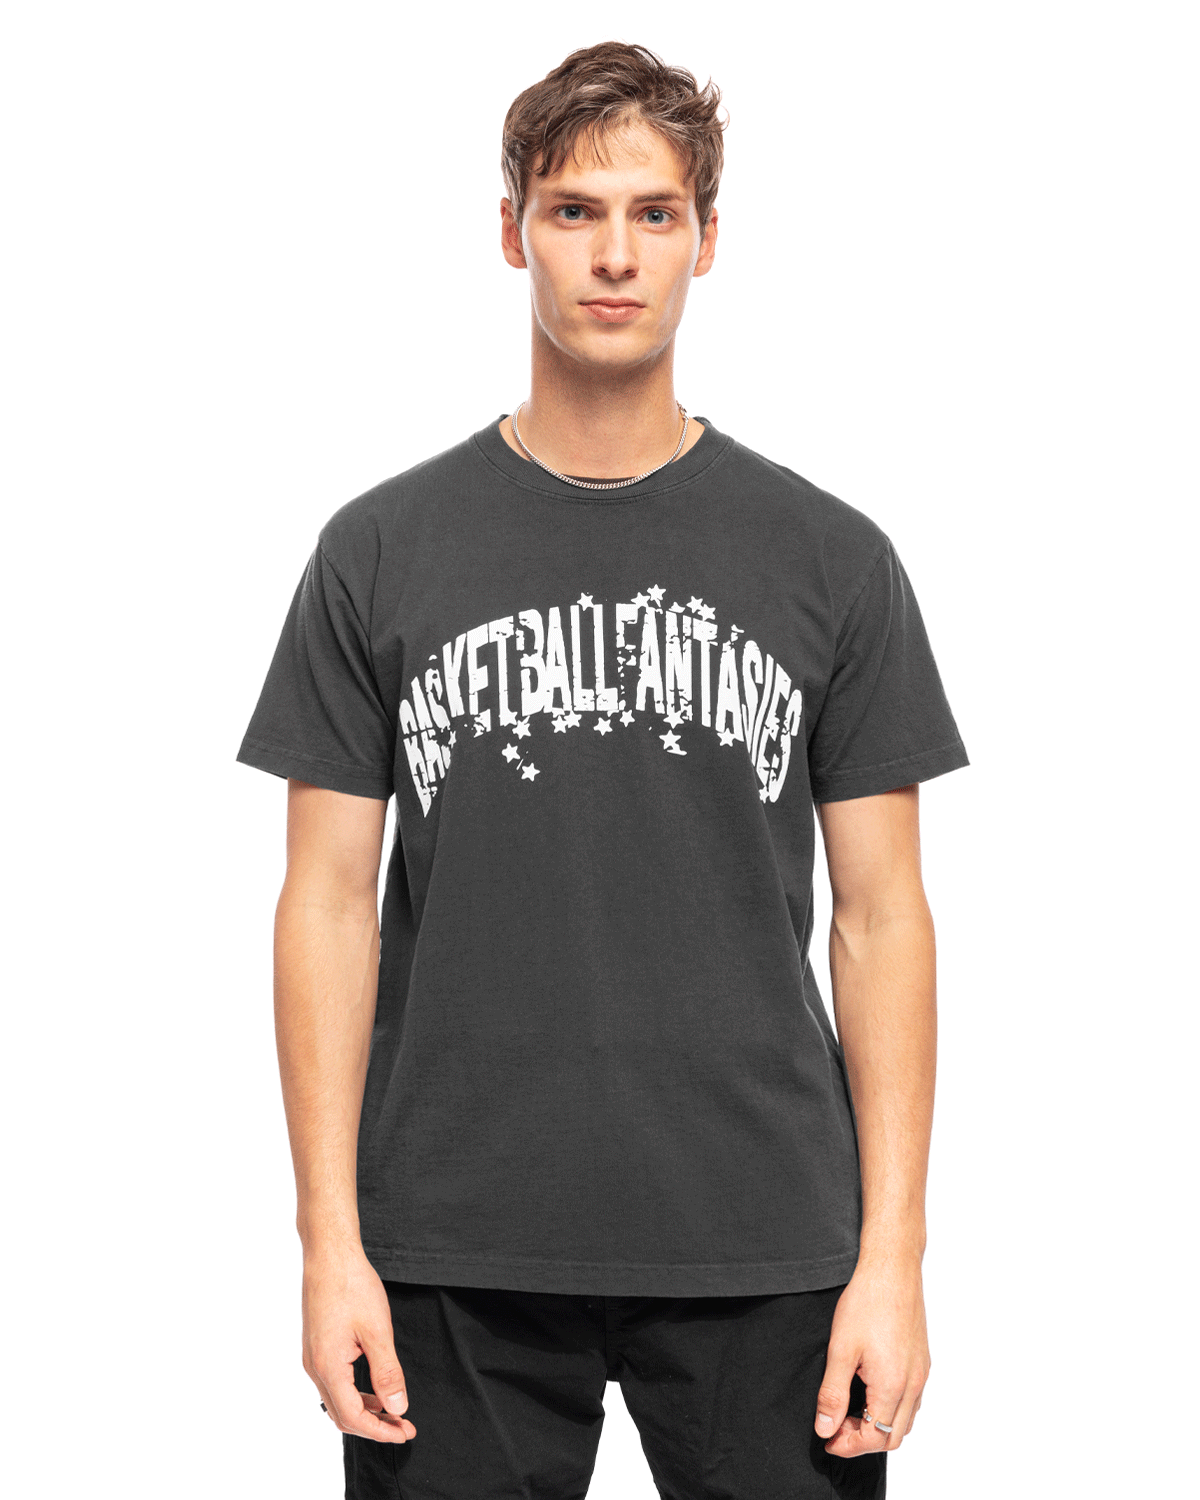 Basketball Fantasies Short Sleeve T-Shirt Washed Black